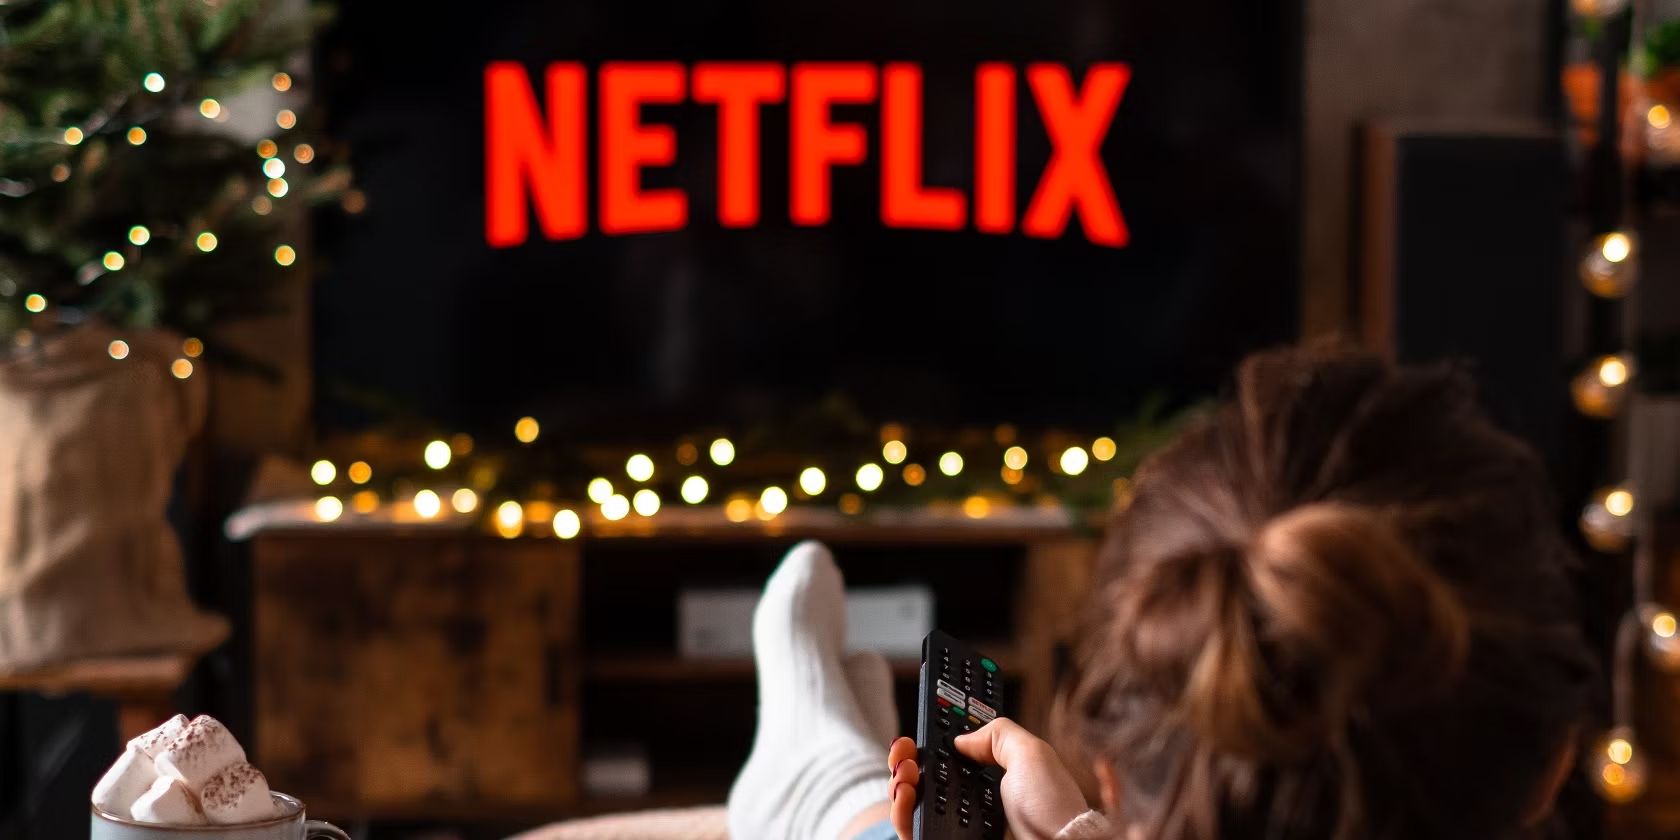 How To Make Netflix Full Screen On LG Smart TV